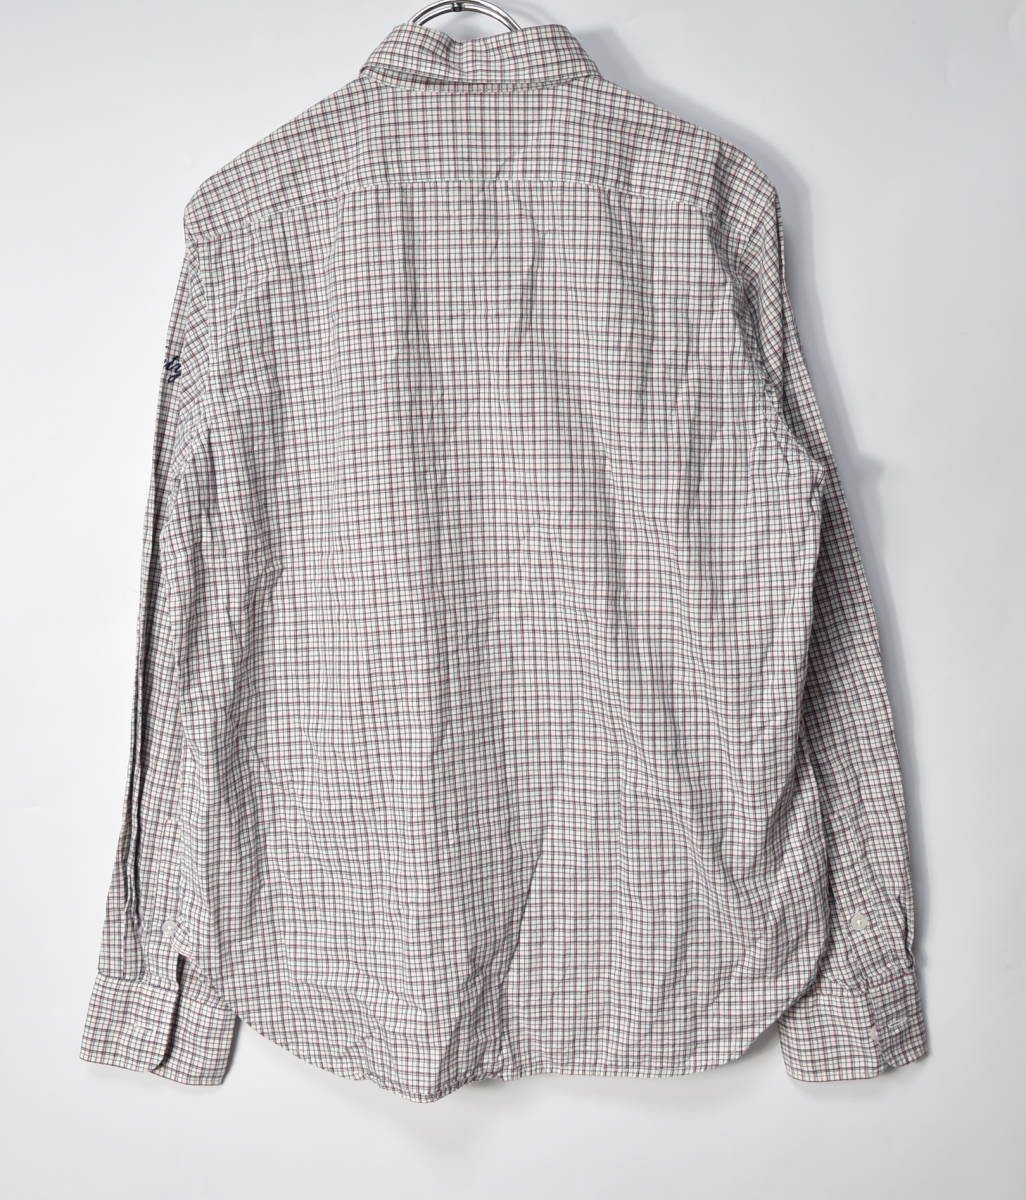 FAT Tokyoefei чай TITCH проверка рубашка рубашка с длинным рукавом Street ske-ta-27215 - 739 50